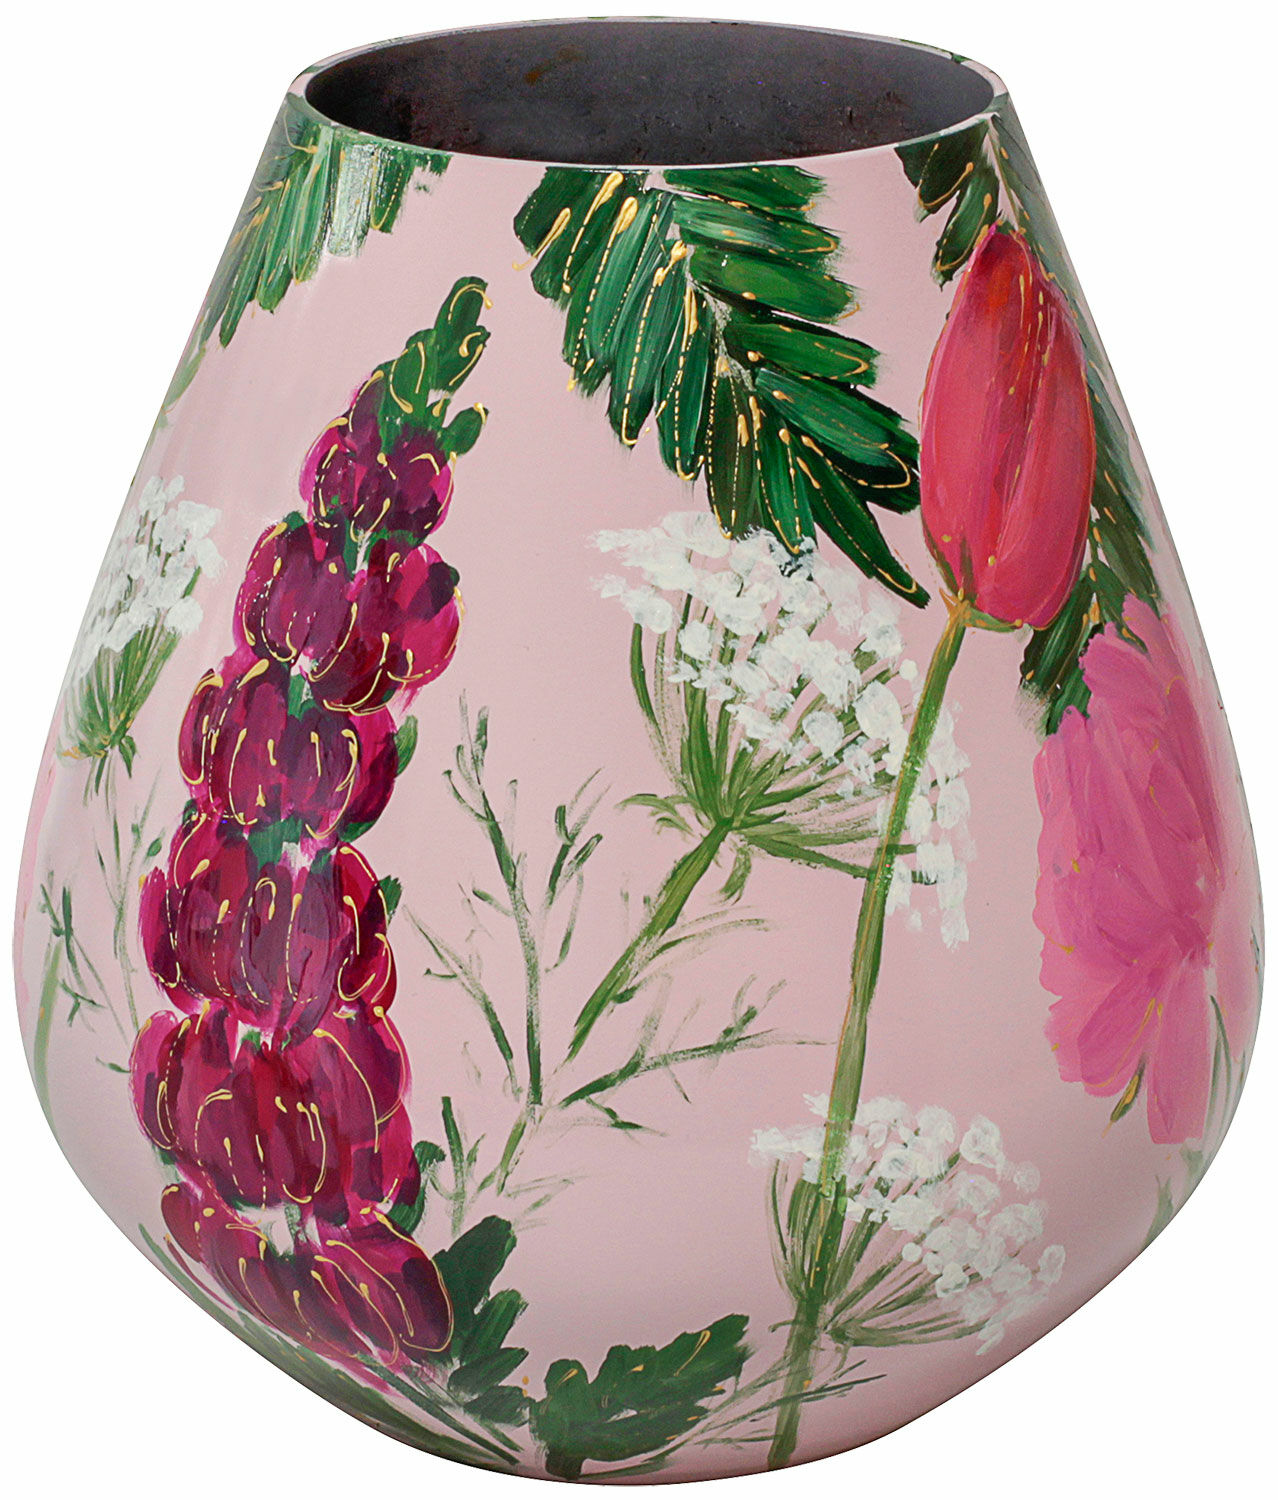 Glass vase "Floral Splendour" by Milou van Schaik Martinet